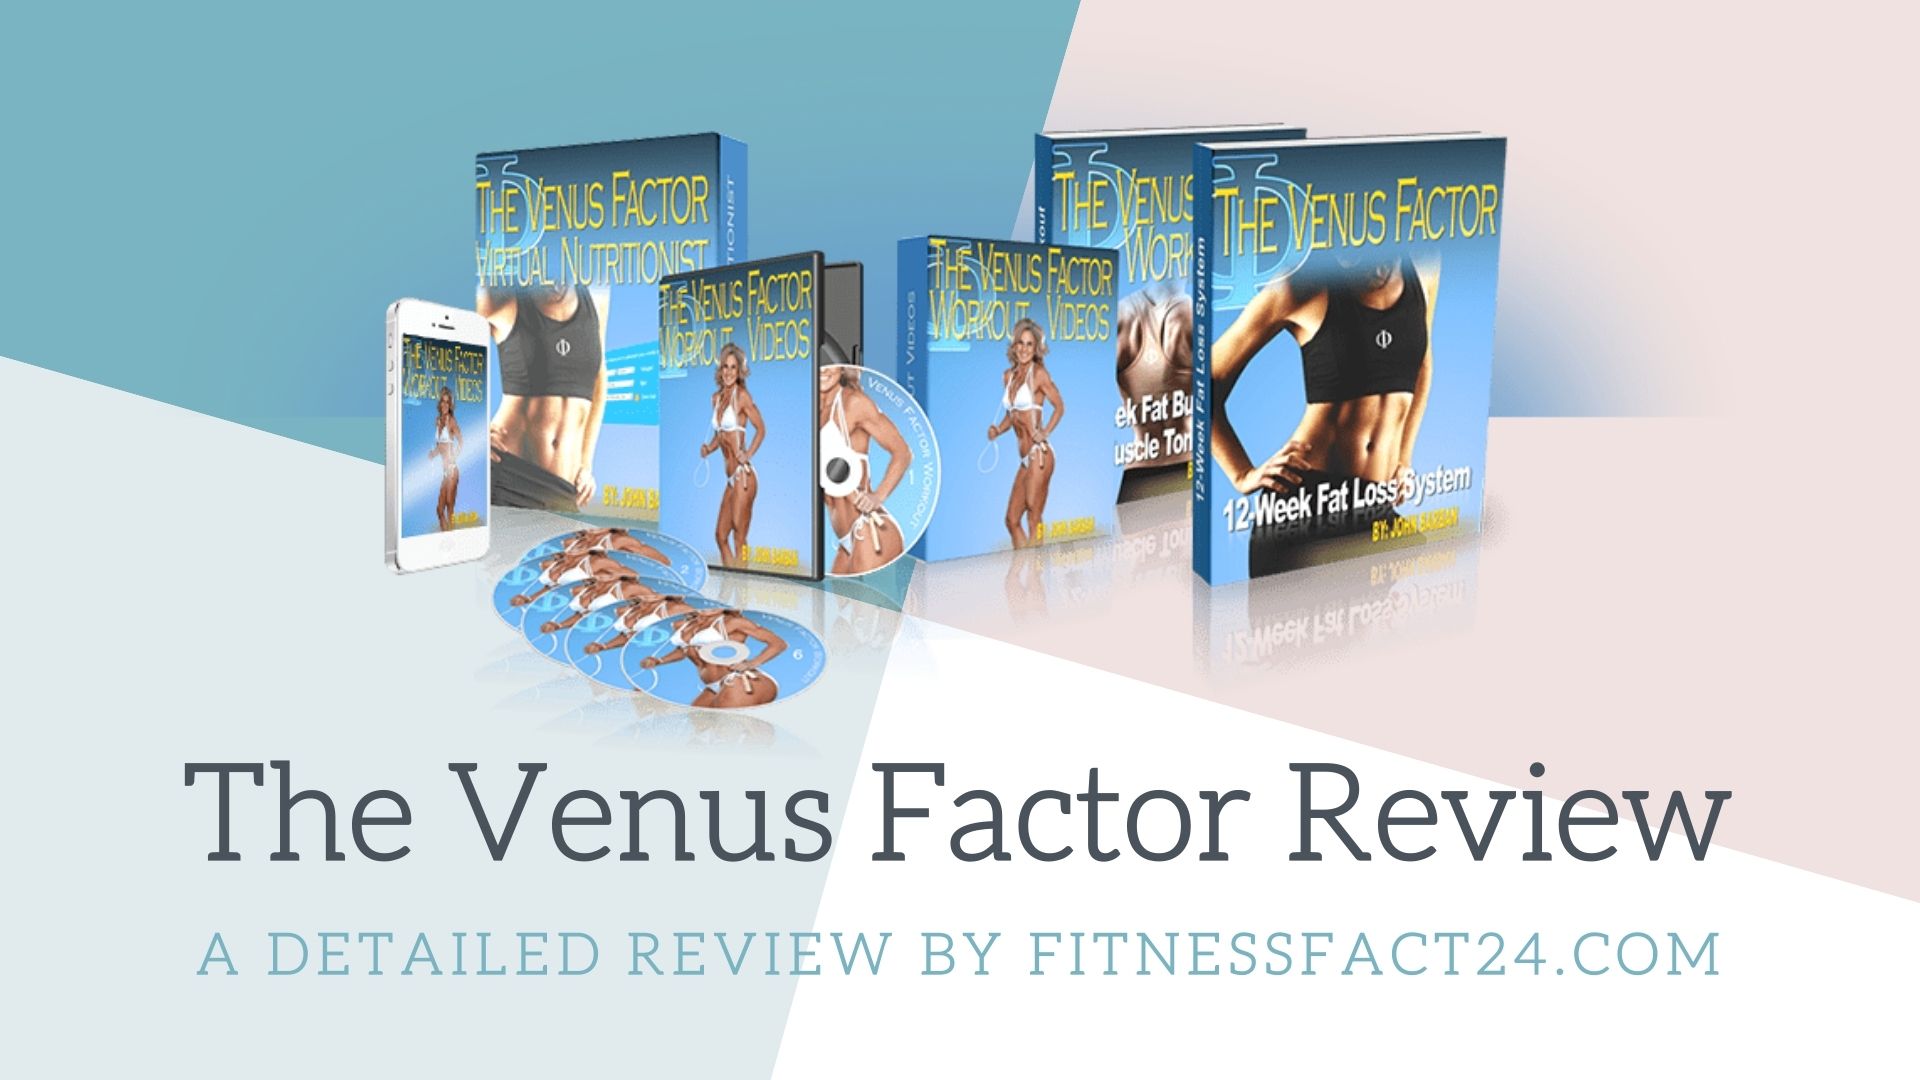 The Venus Factor Review